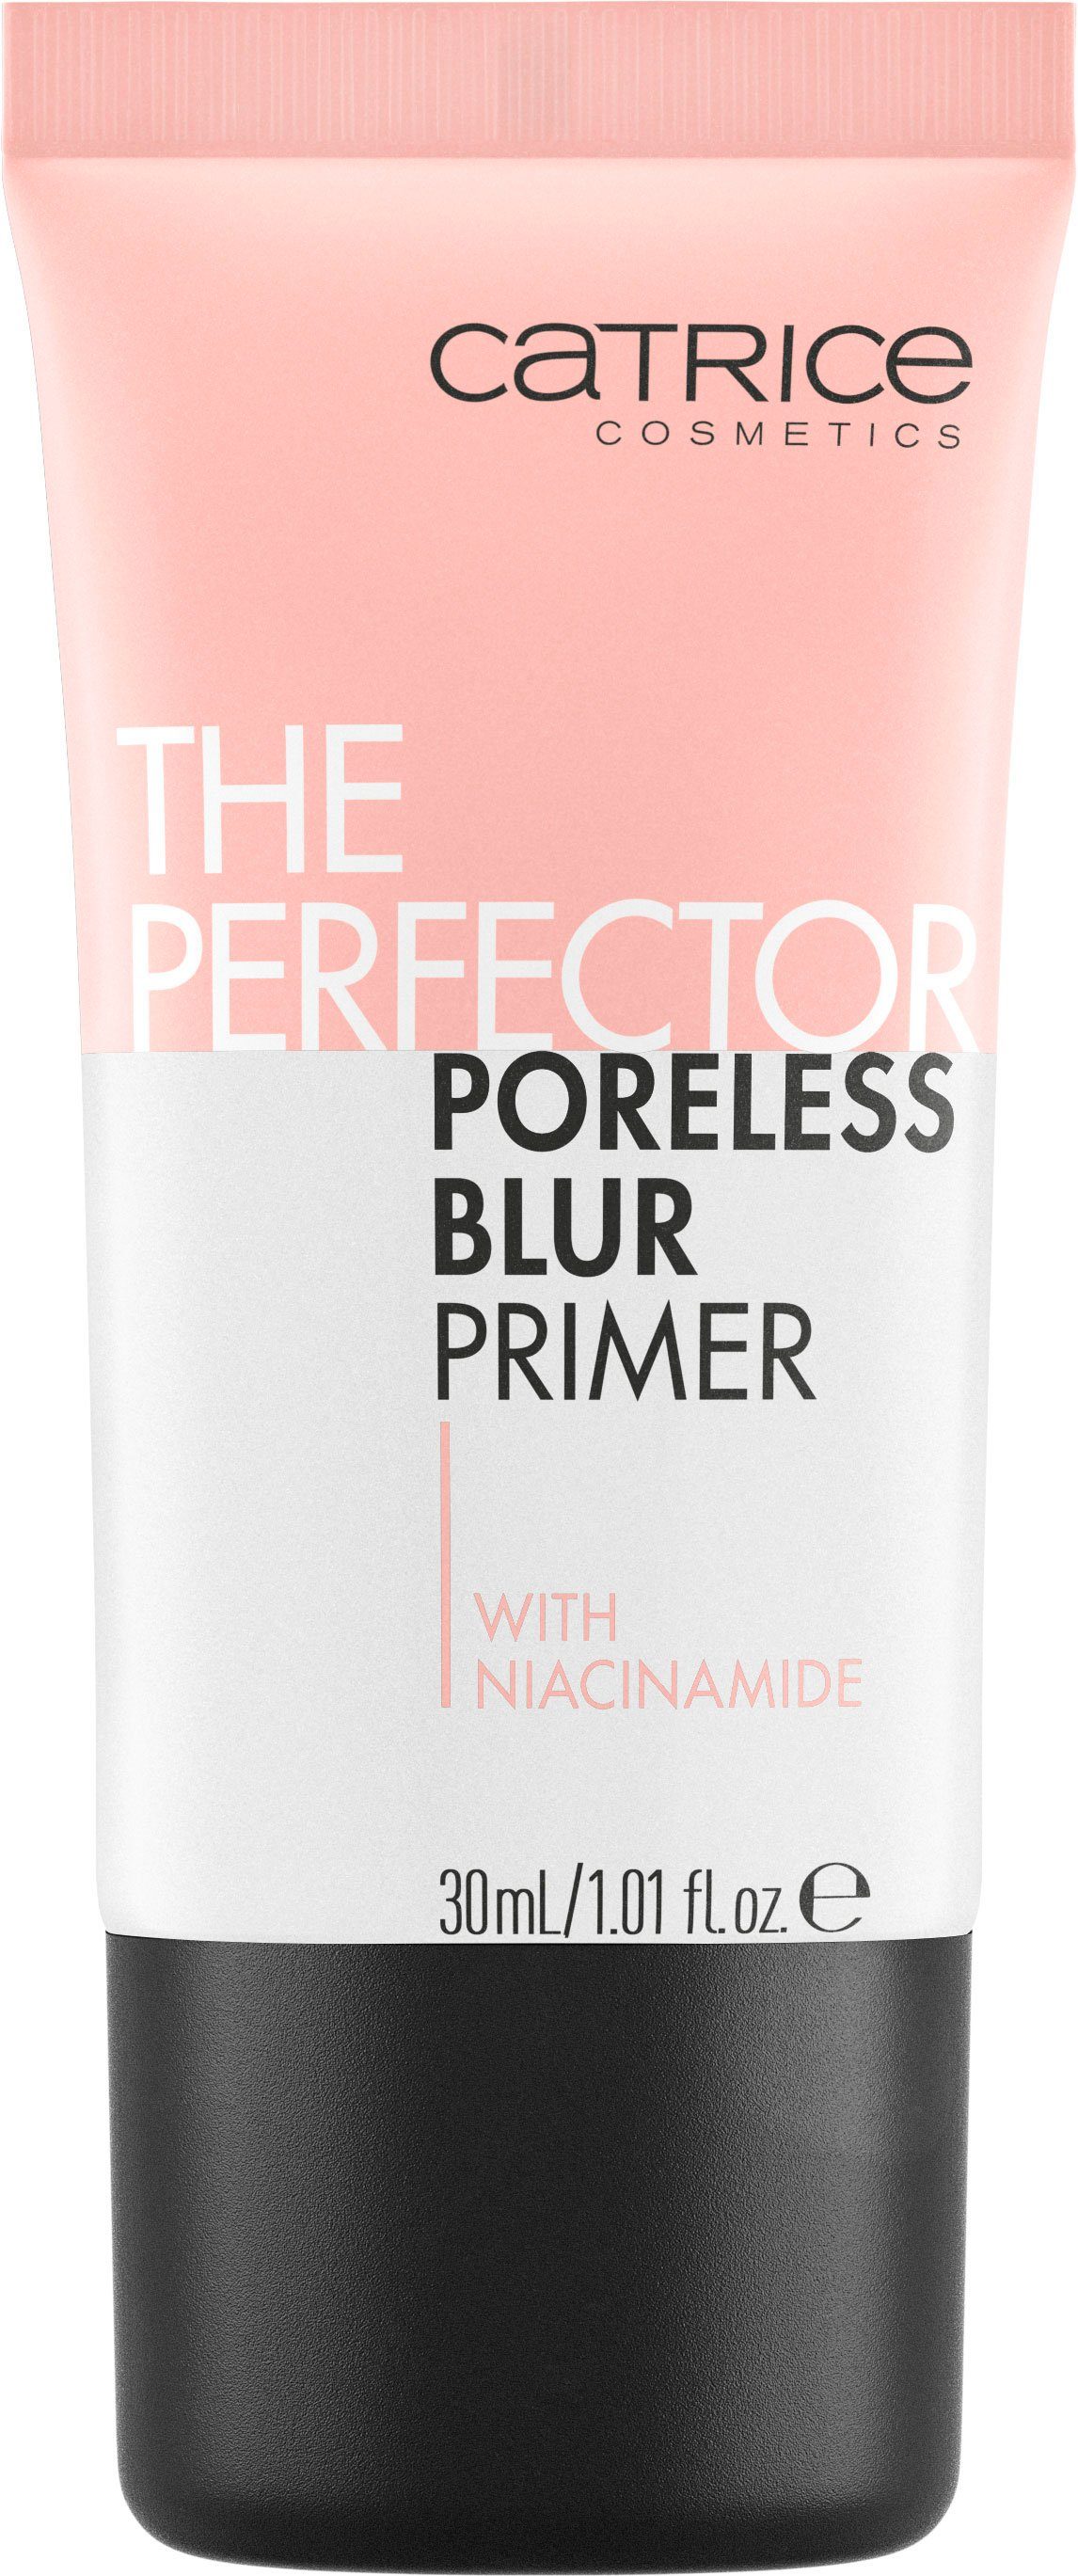 Blur Poreless Primer, The Primer Catrice 3-tlg. Perfector